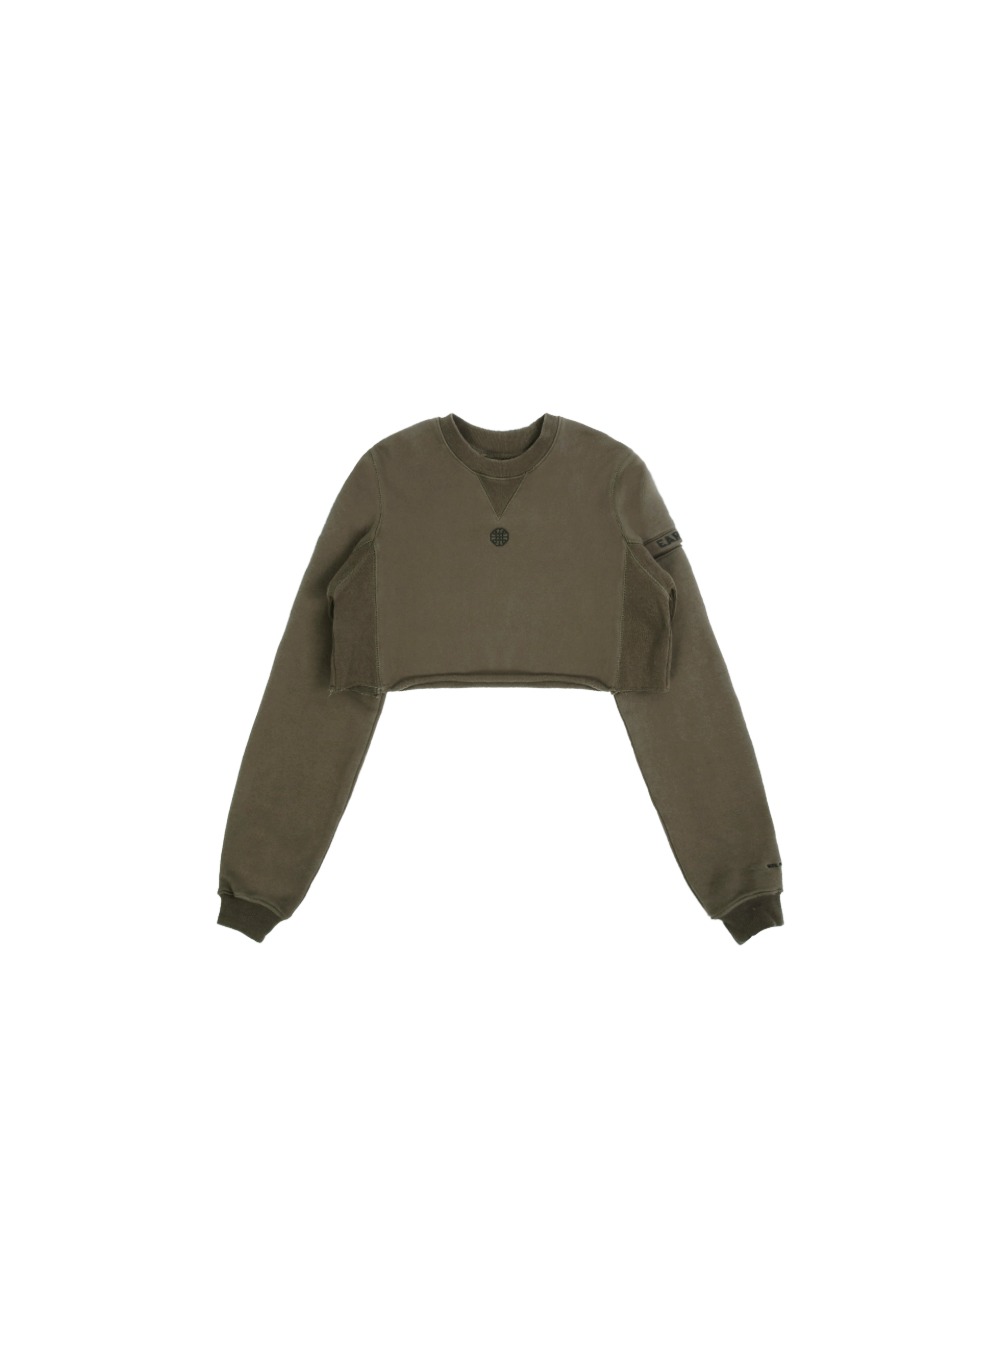 The Crop Sweatshirt - Military